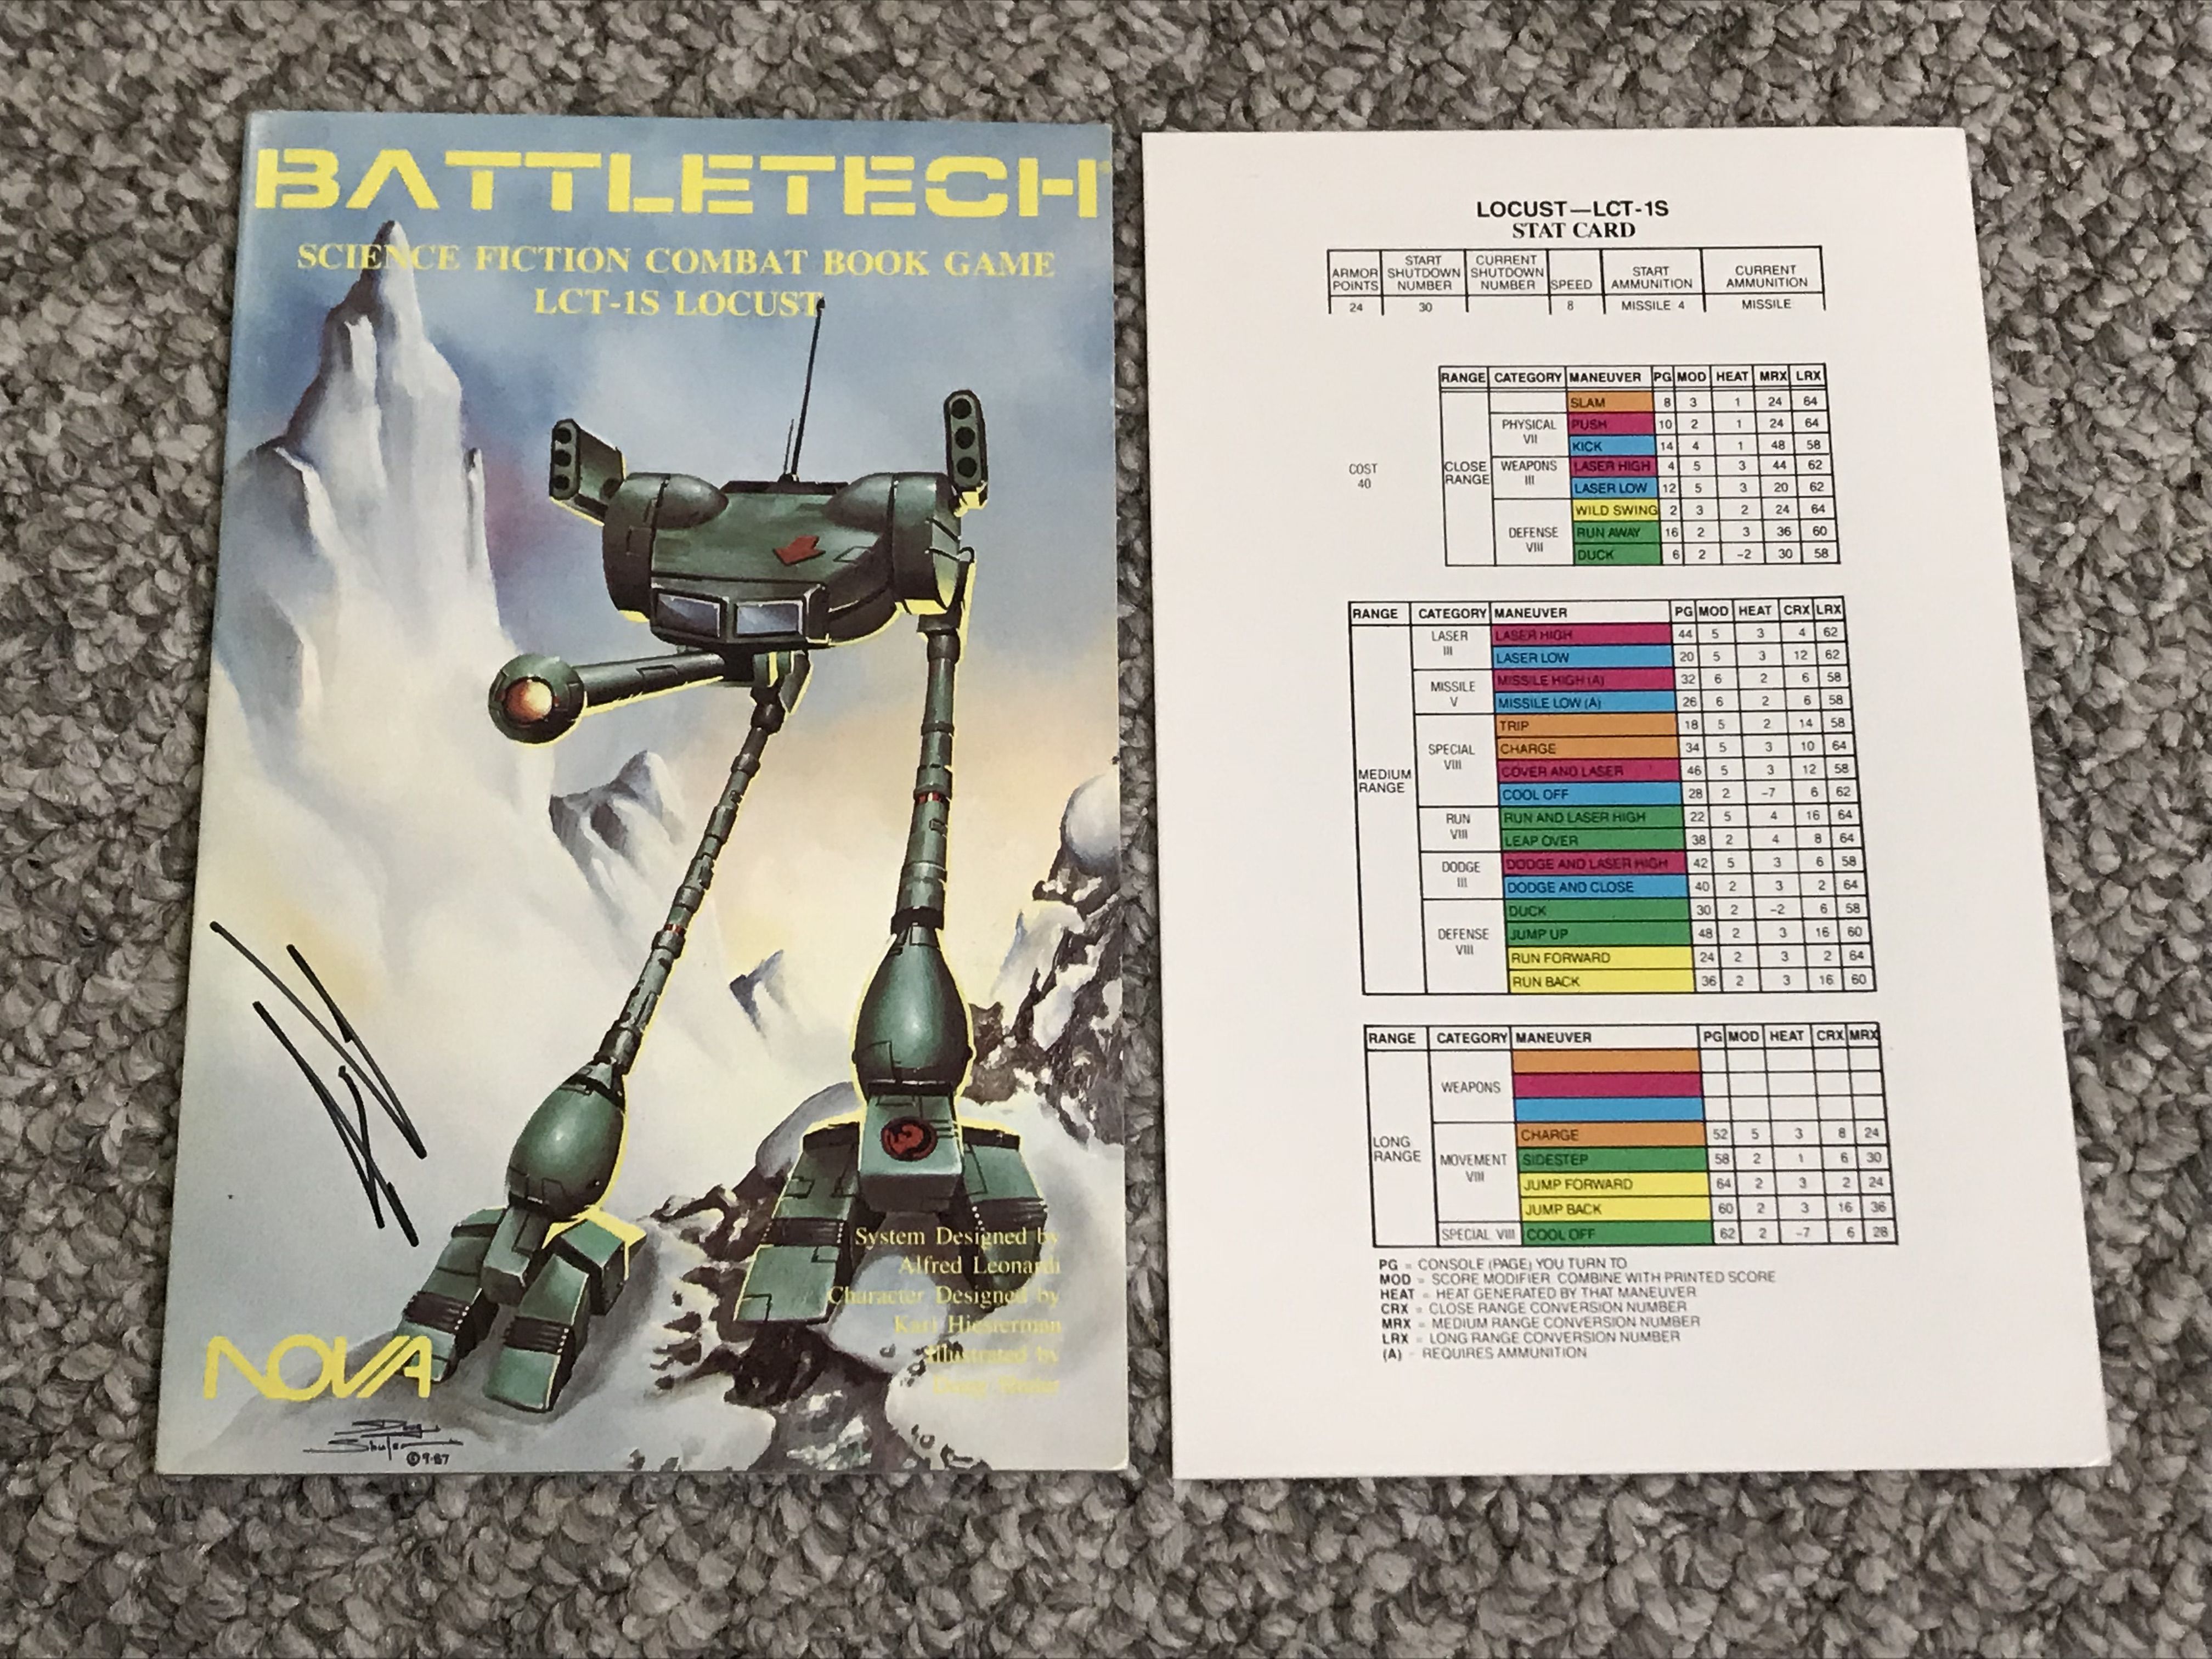 BattleTech Science Fiction Combat Book Game: LCT-1S Locust